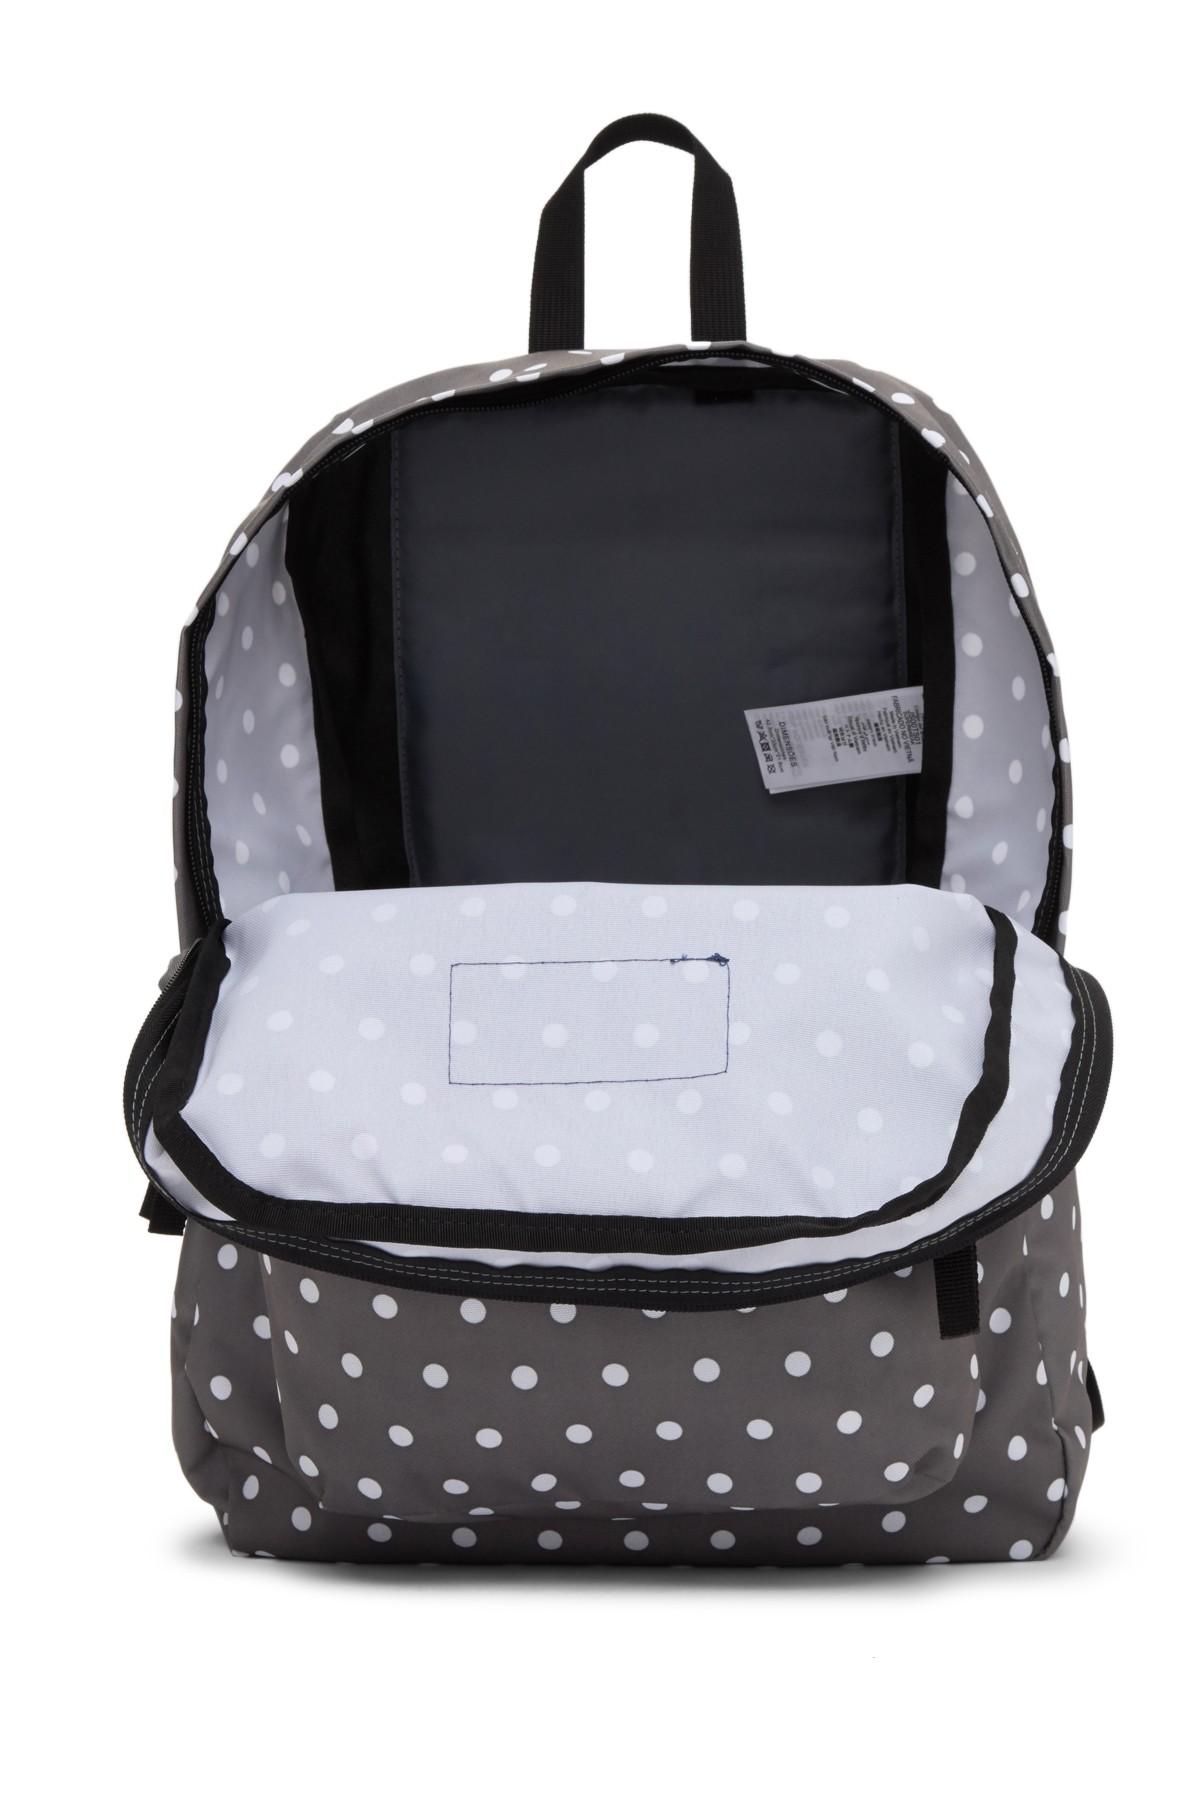 Jansport Superbreak Polka Dot Backpack in Gray | Lyst